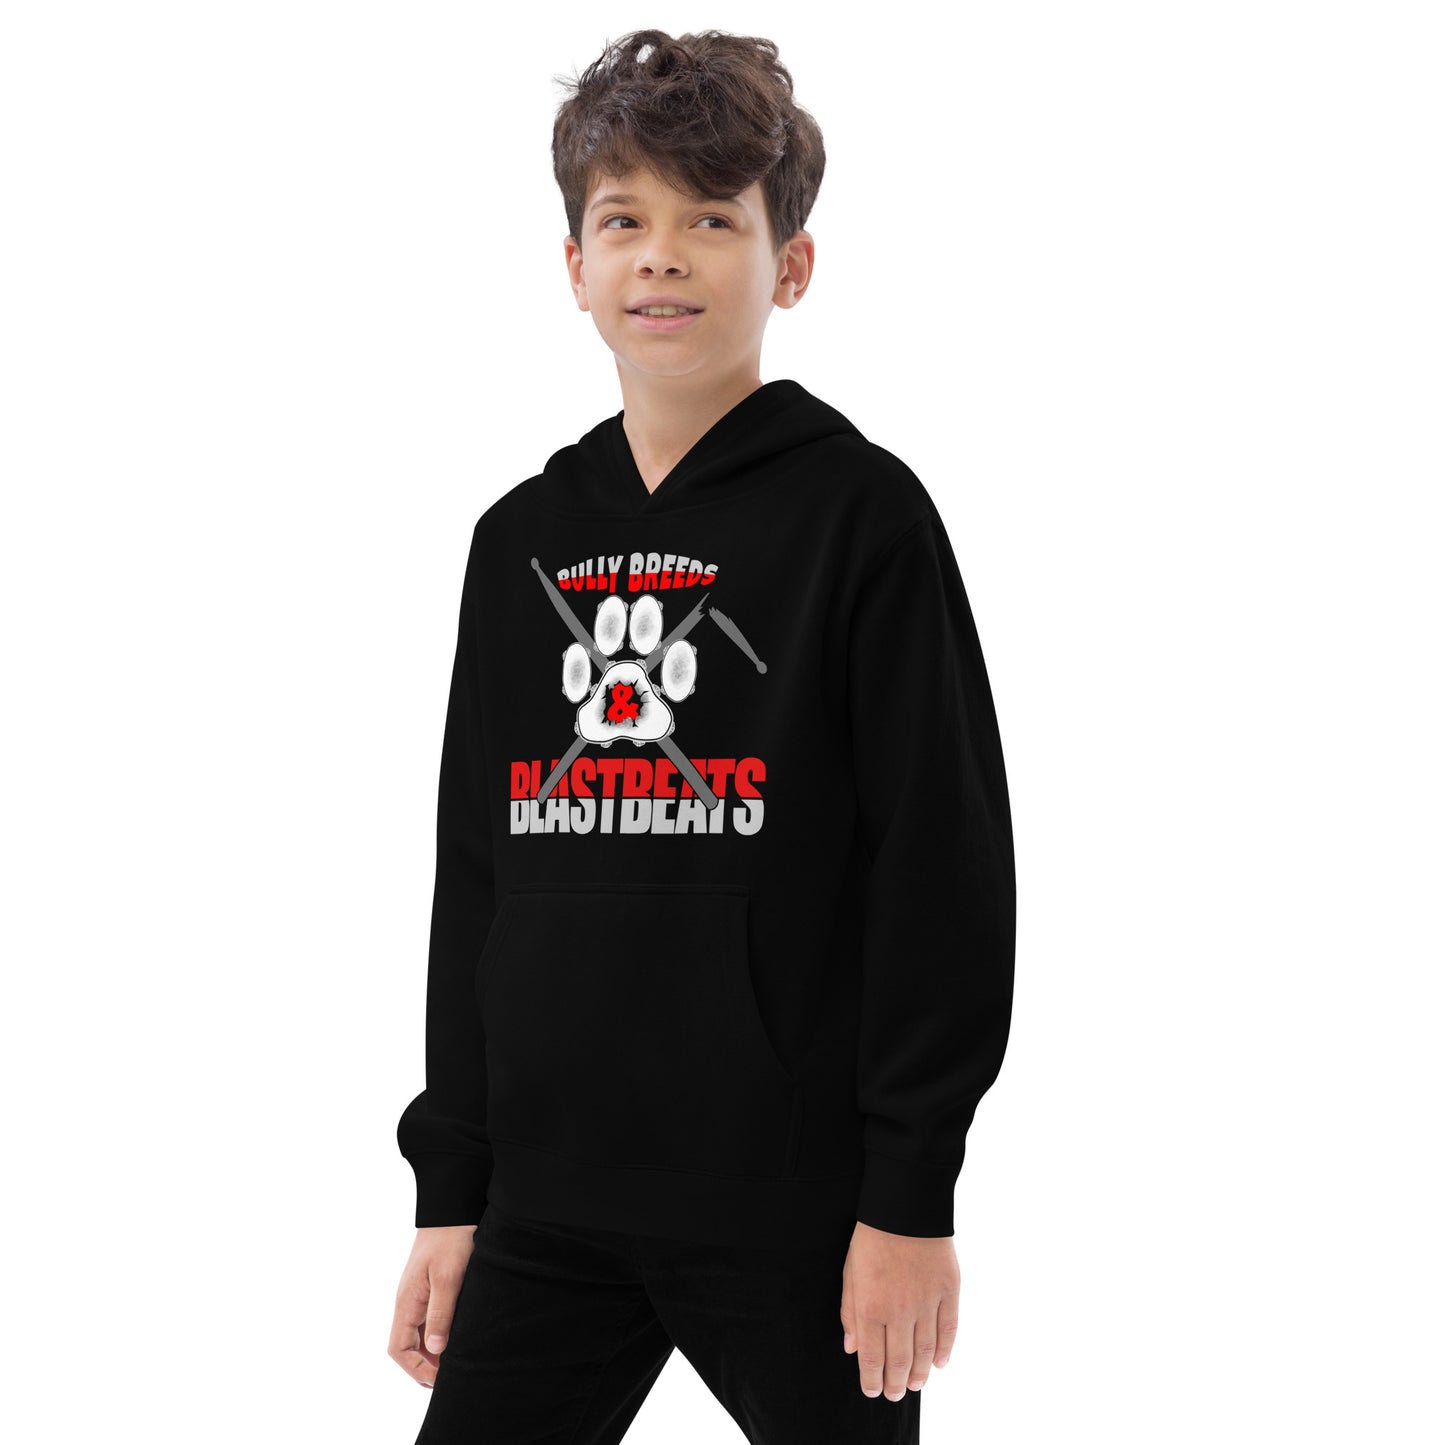 Bully Blast Beats Kids fleece hoodie